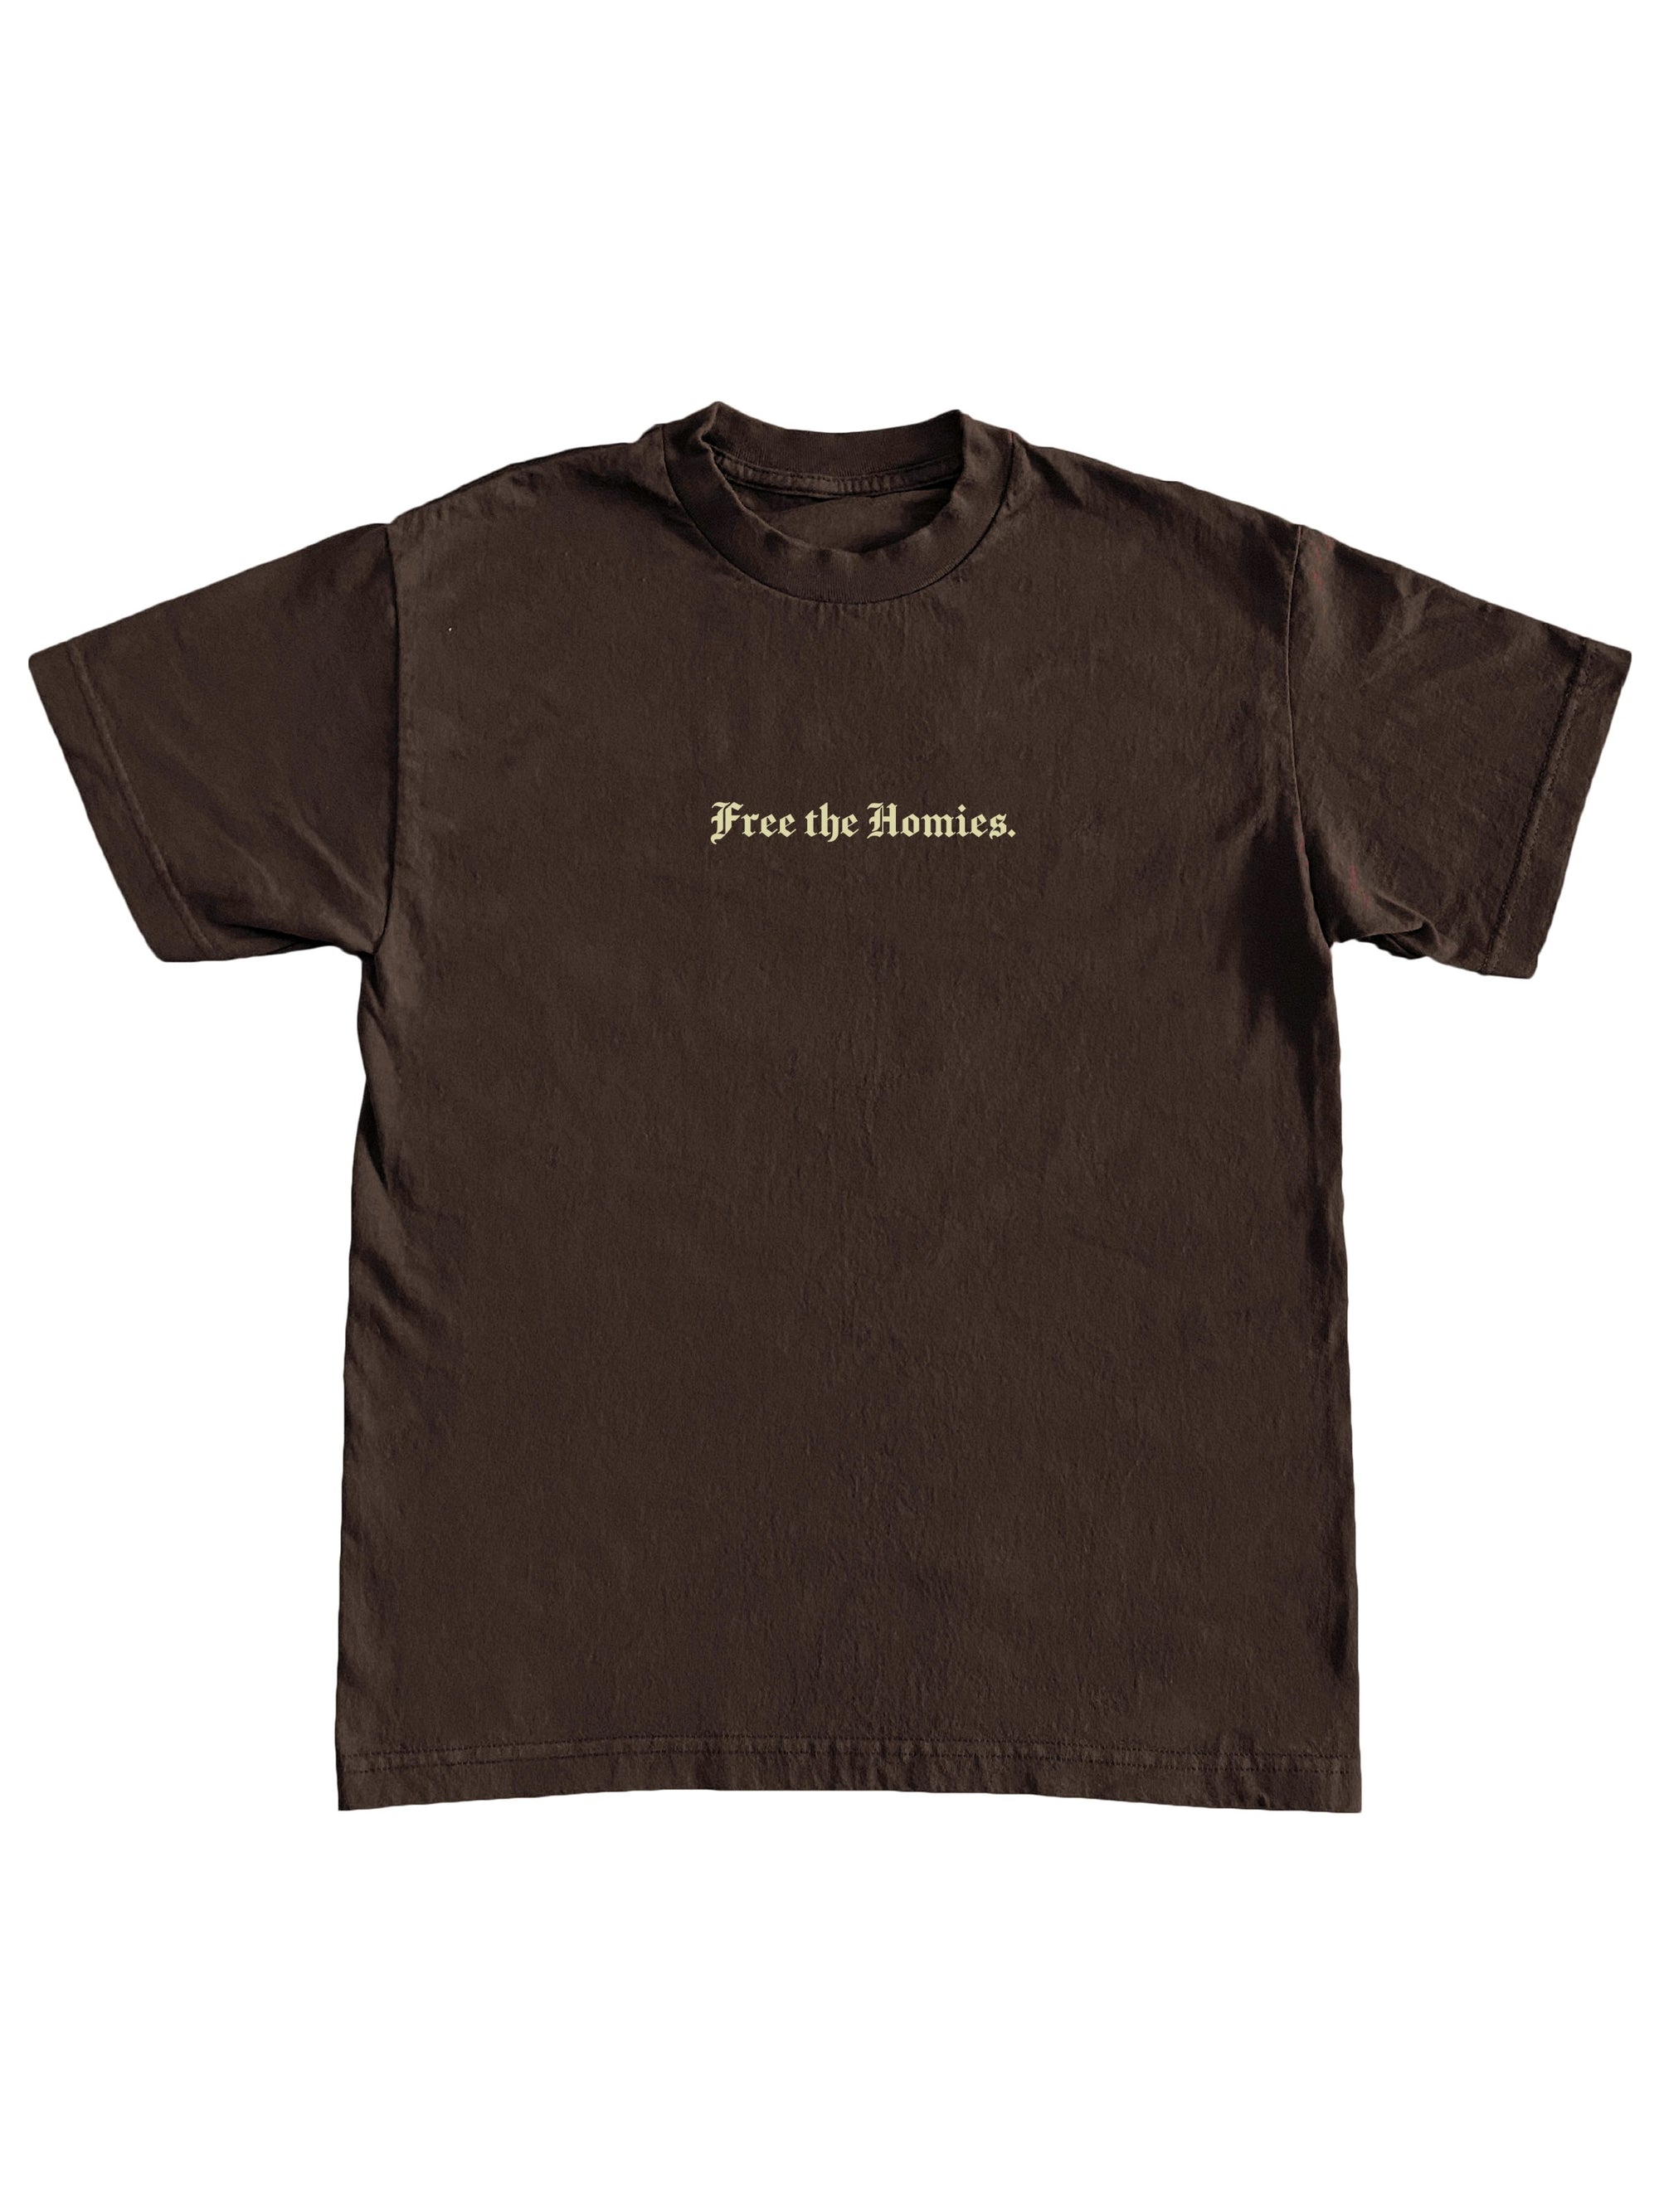 Free the Homies Shirt (Decarcerate Refresh)